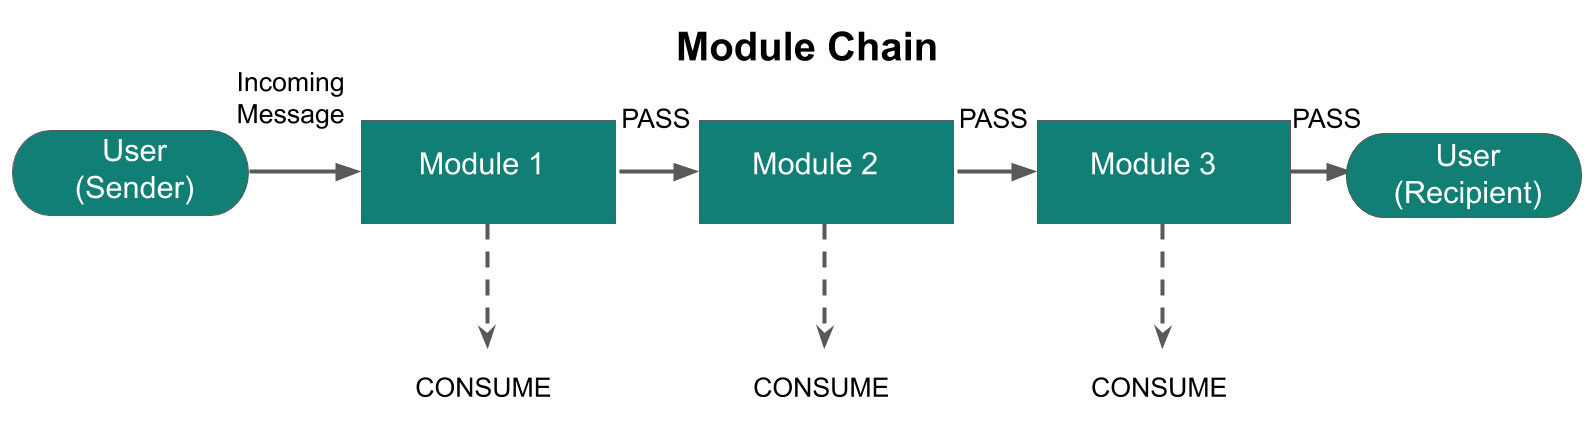 Module Chain